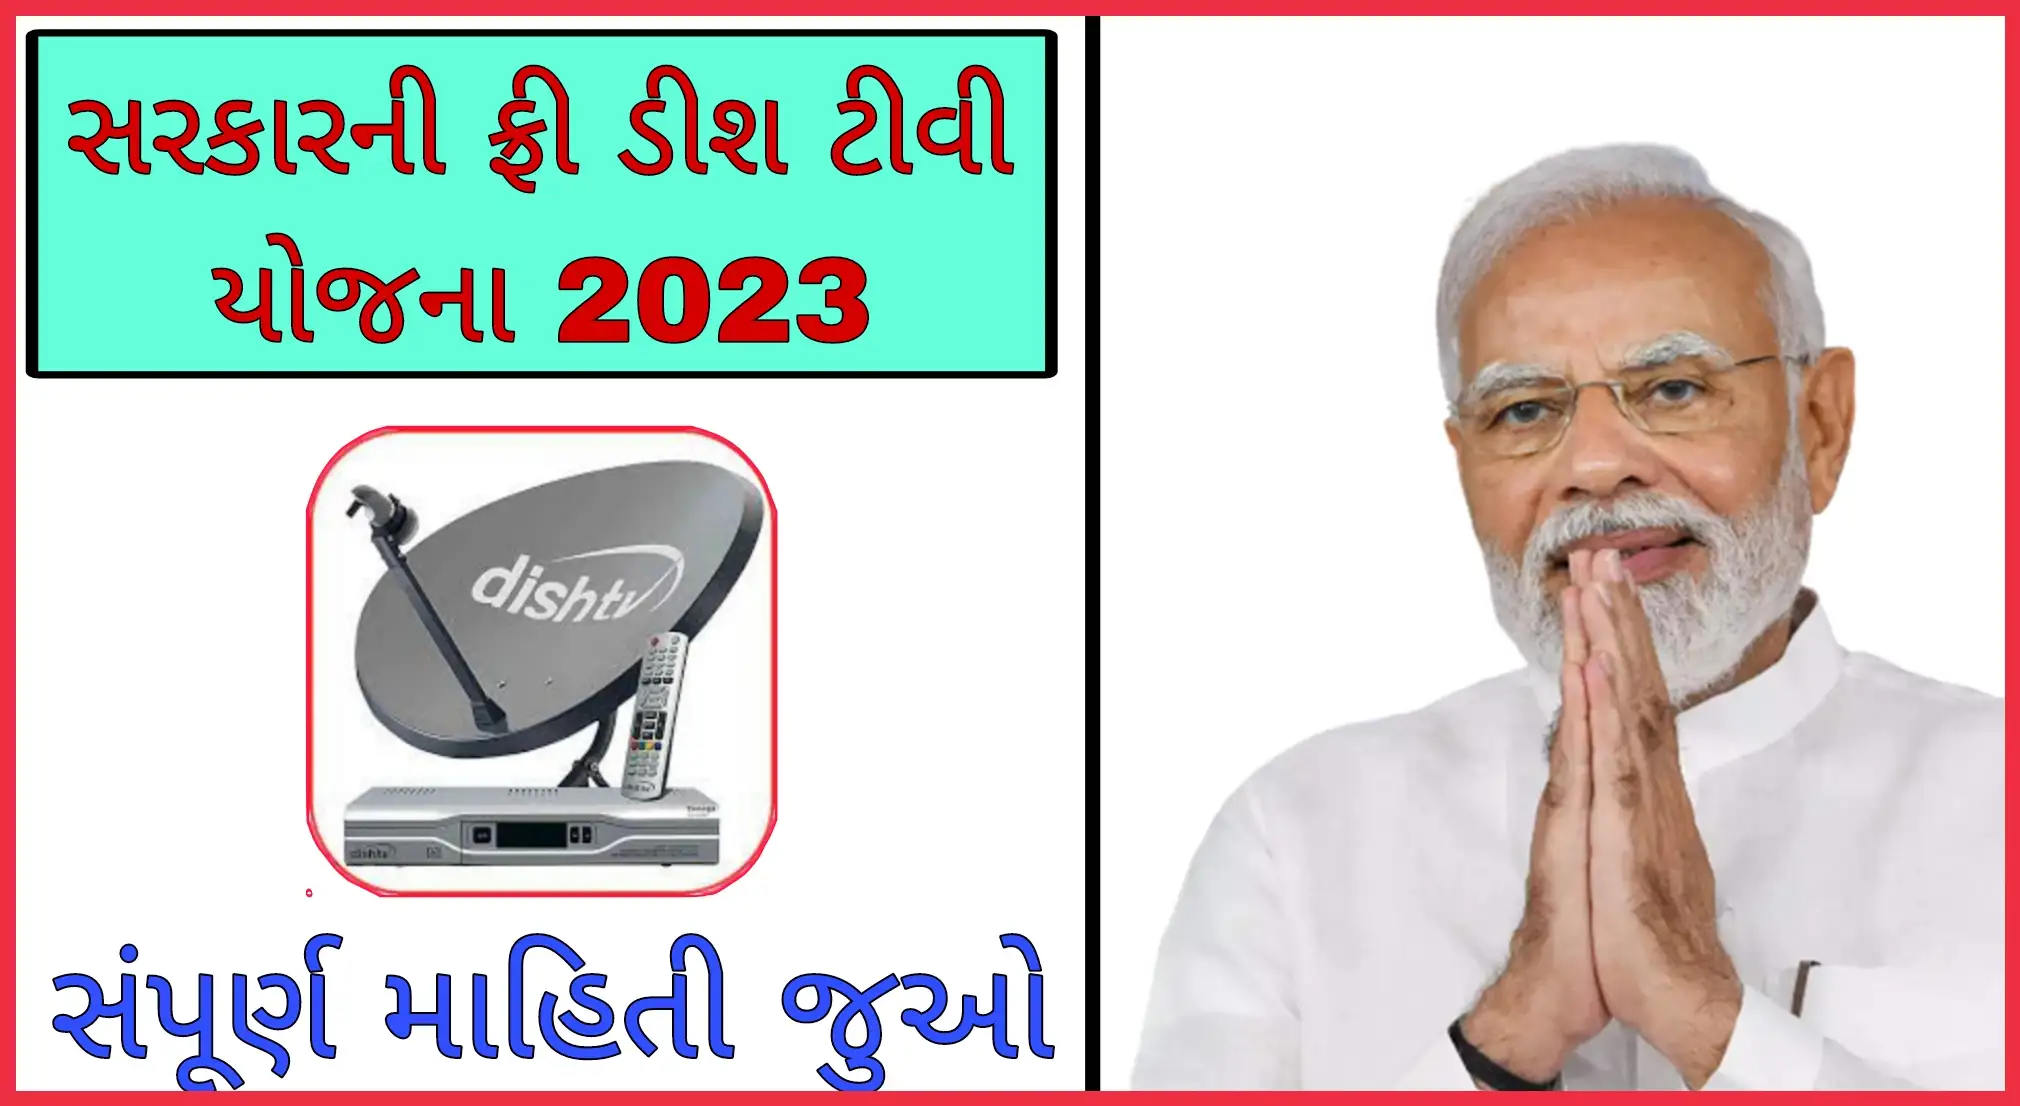 Government Free Dish TV Yojana 2023